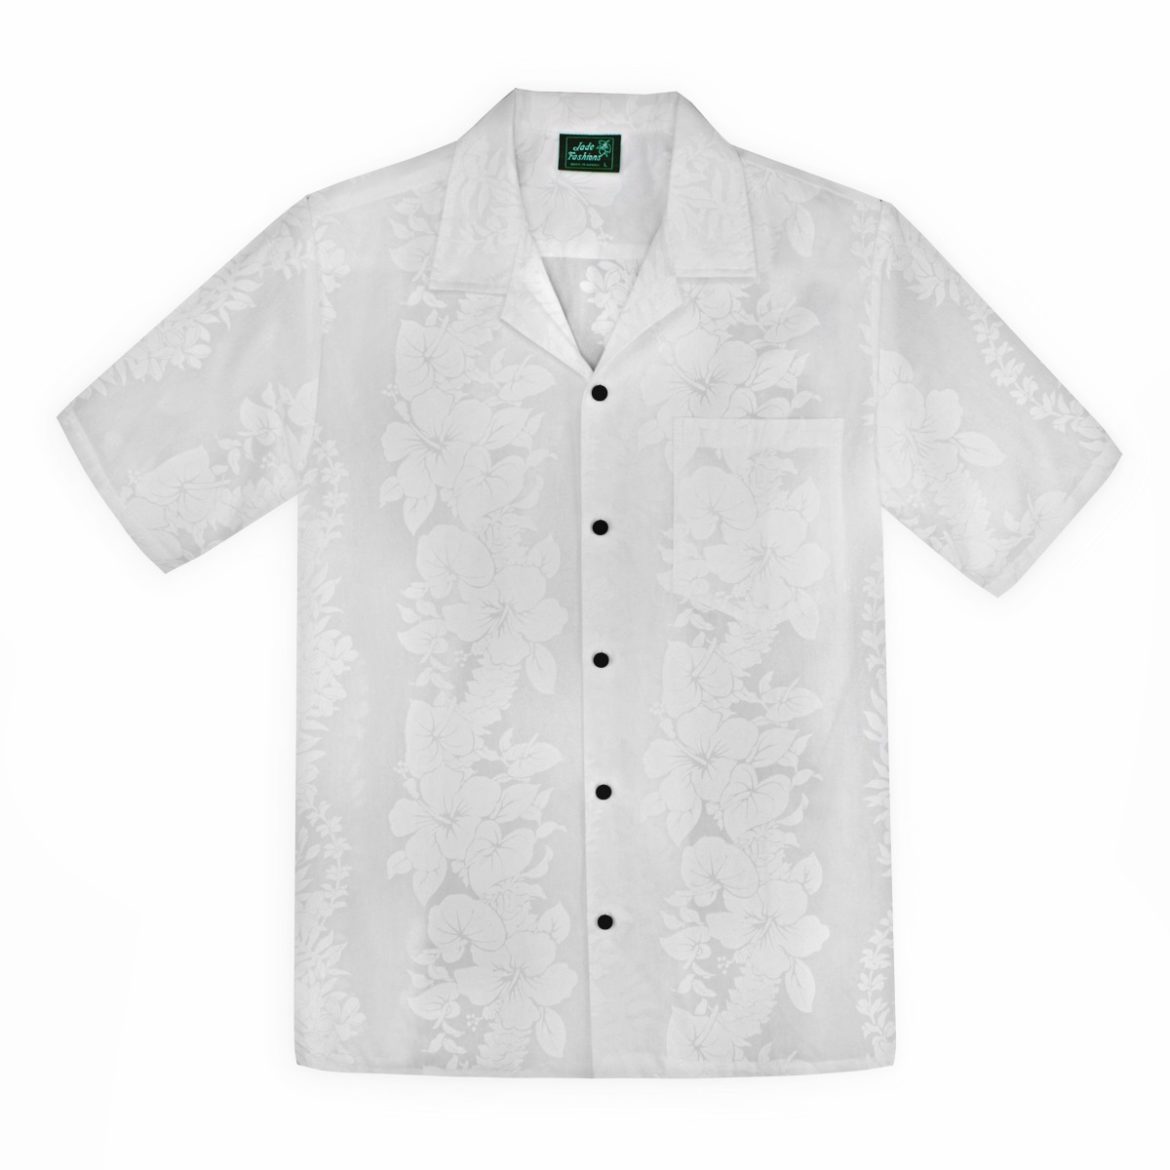 mens hawaiian shirt - romantica -white on white